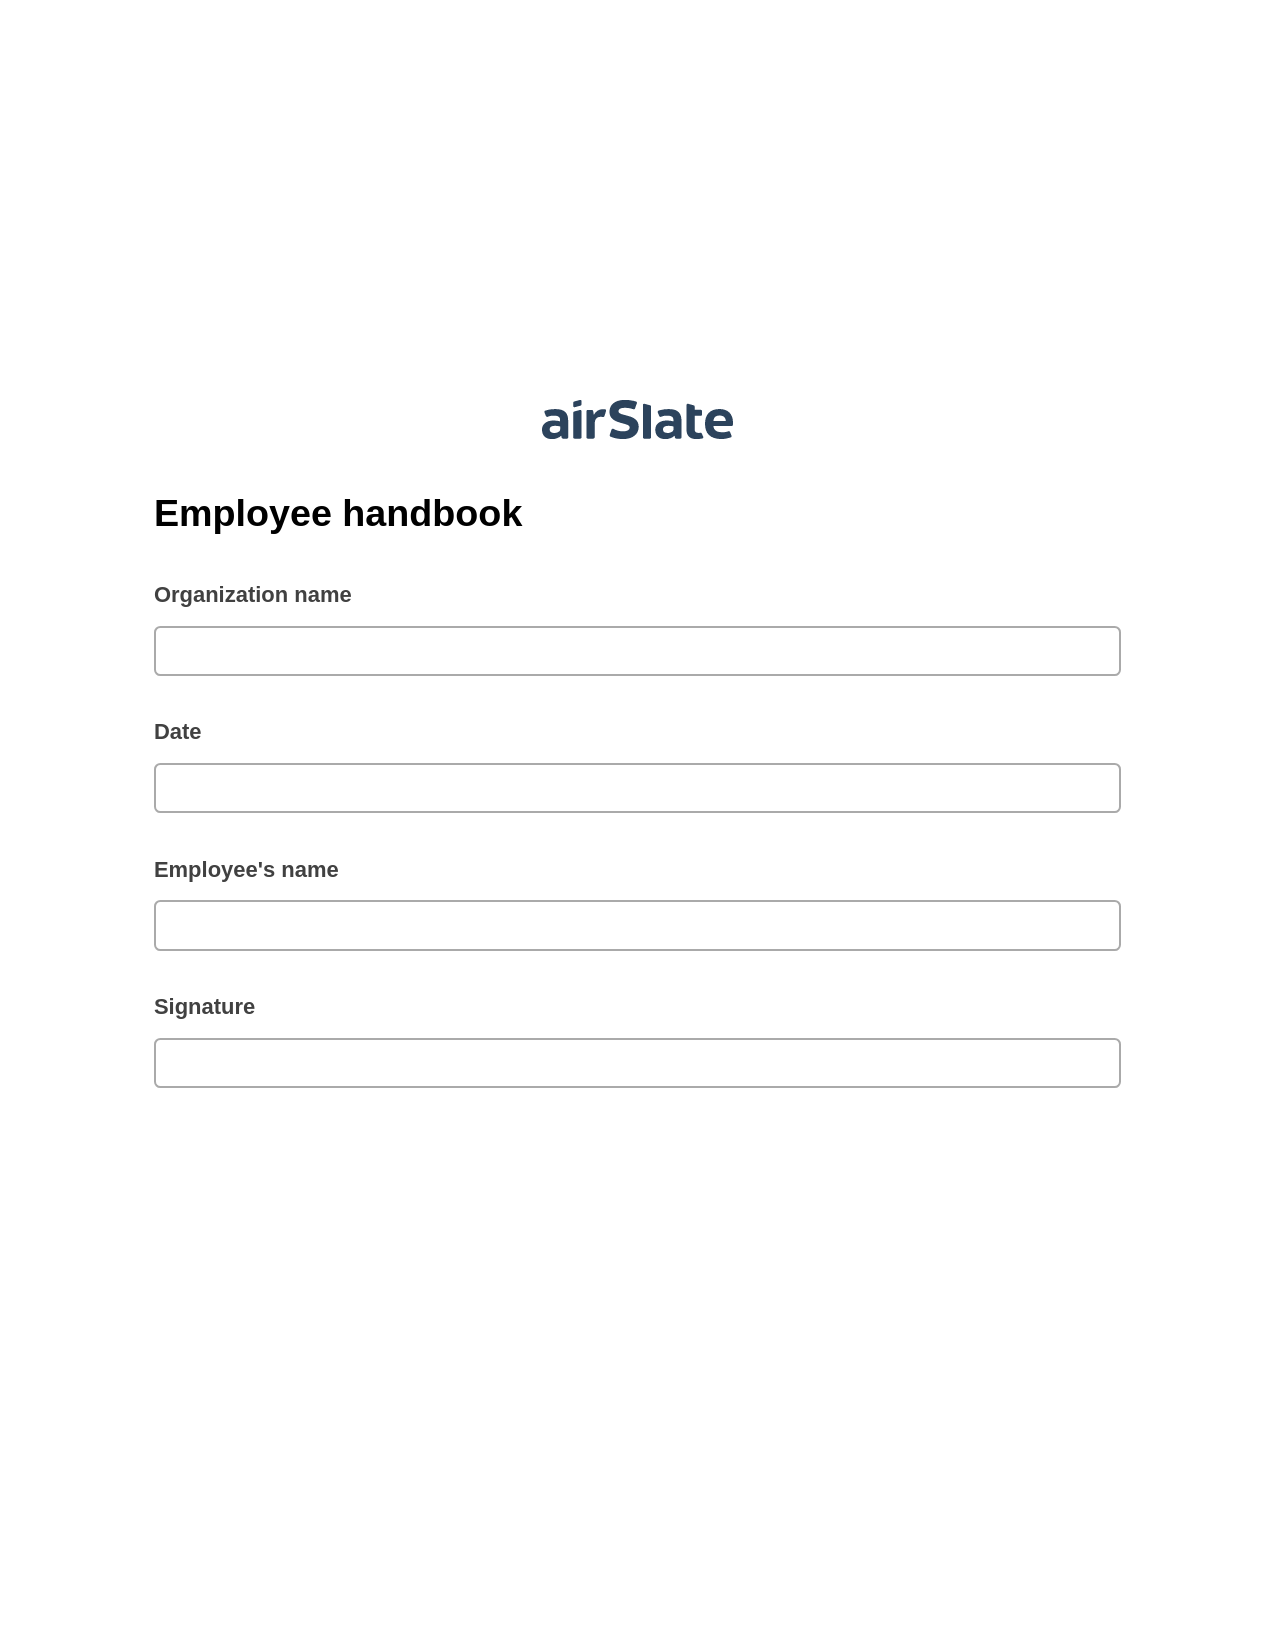 Multirole Employee handbook Pre-fill from CSV File Bot, Update NetSuite Records Bot, Export to Google Sheet Bot